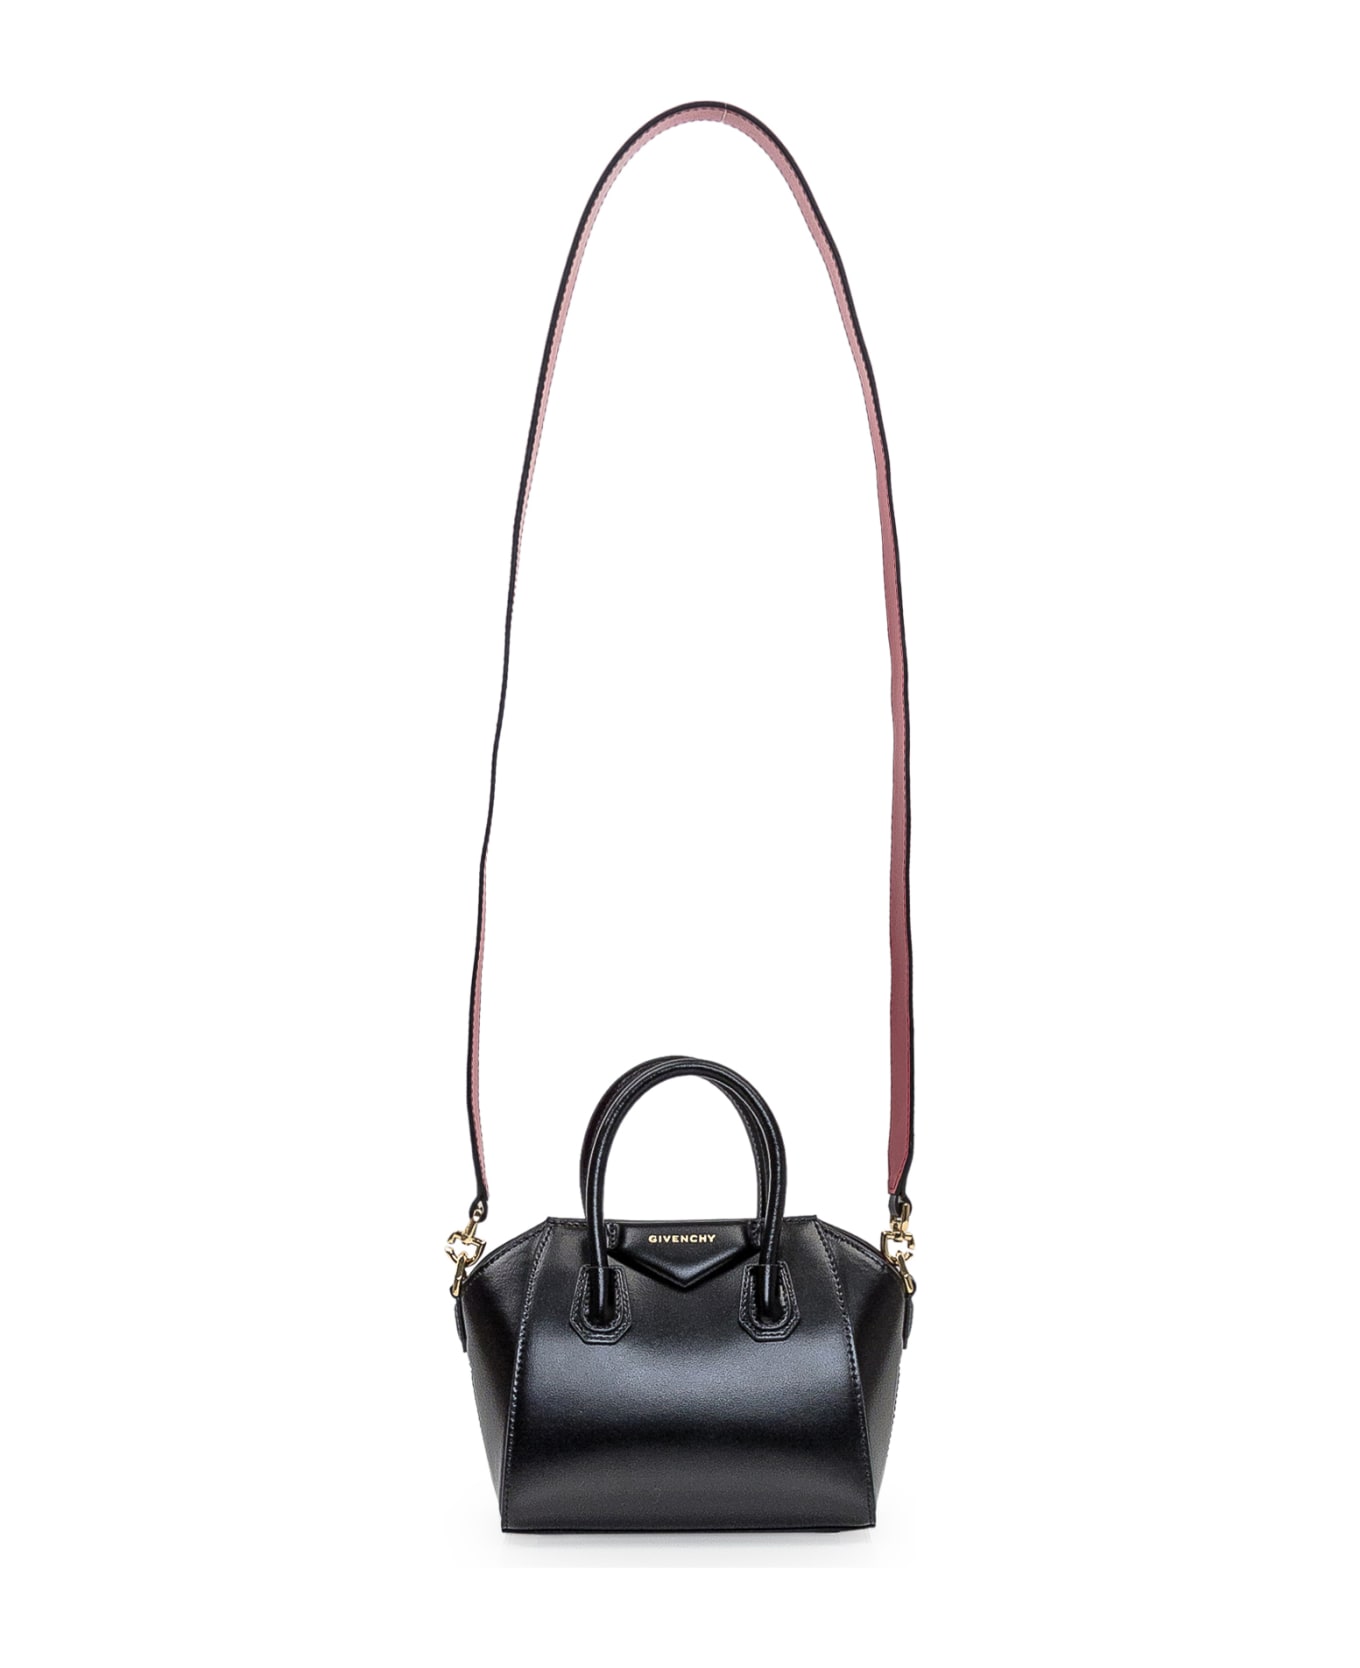 Givenchy Antigona Toy Handbag - Black